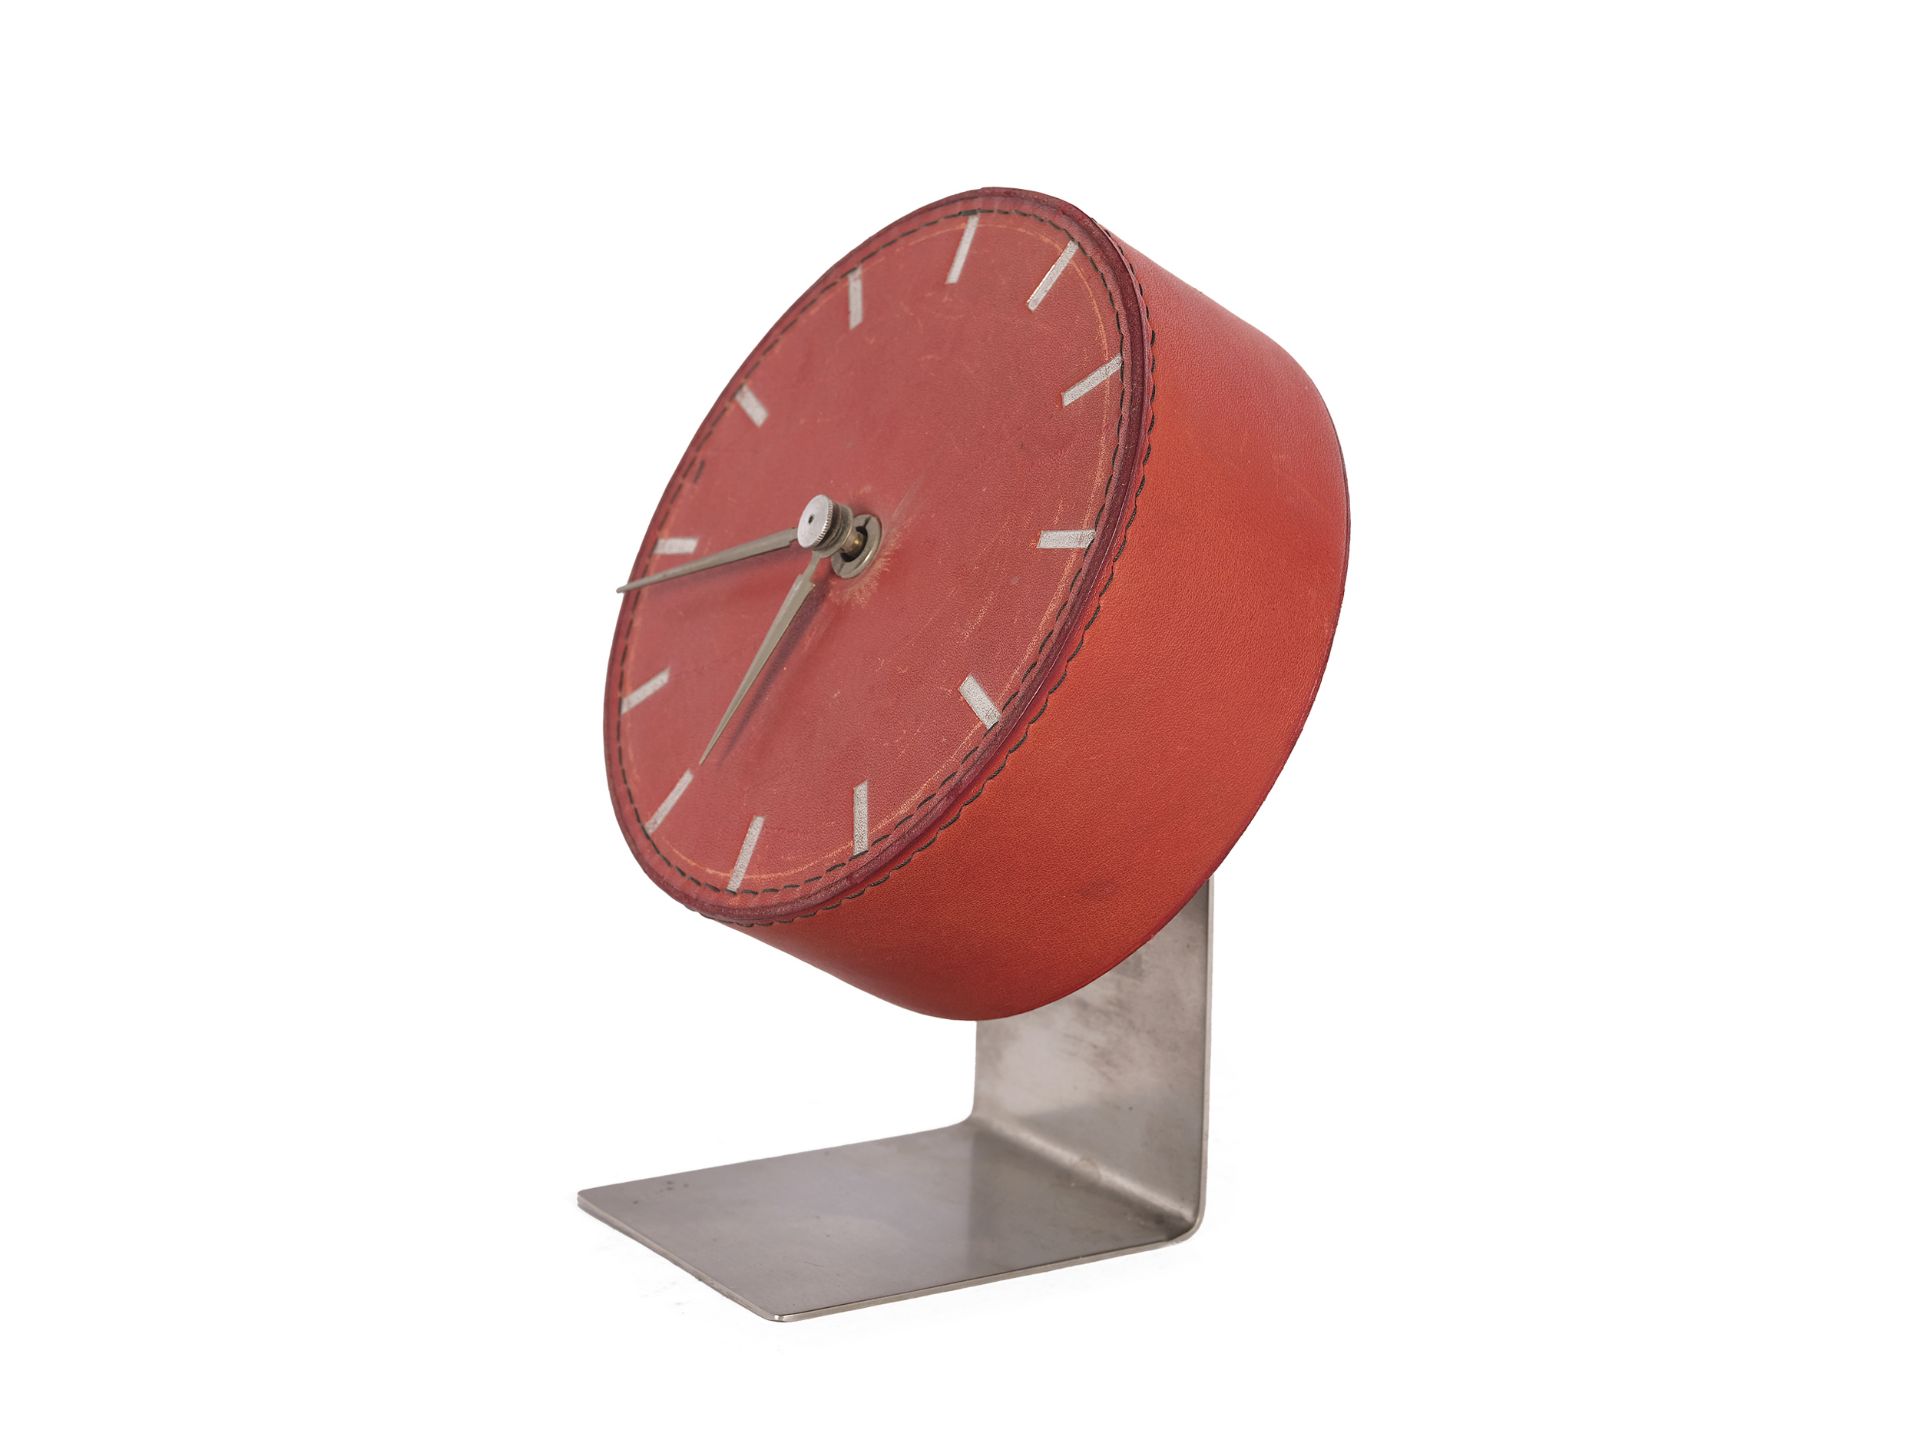 Commode clock, Carl Auböck, Vienna 1900 - 1957 Vienna  - Image 2 of 3